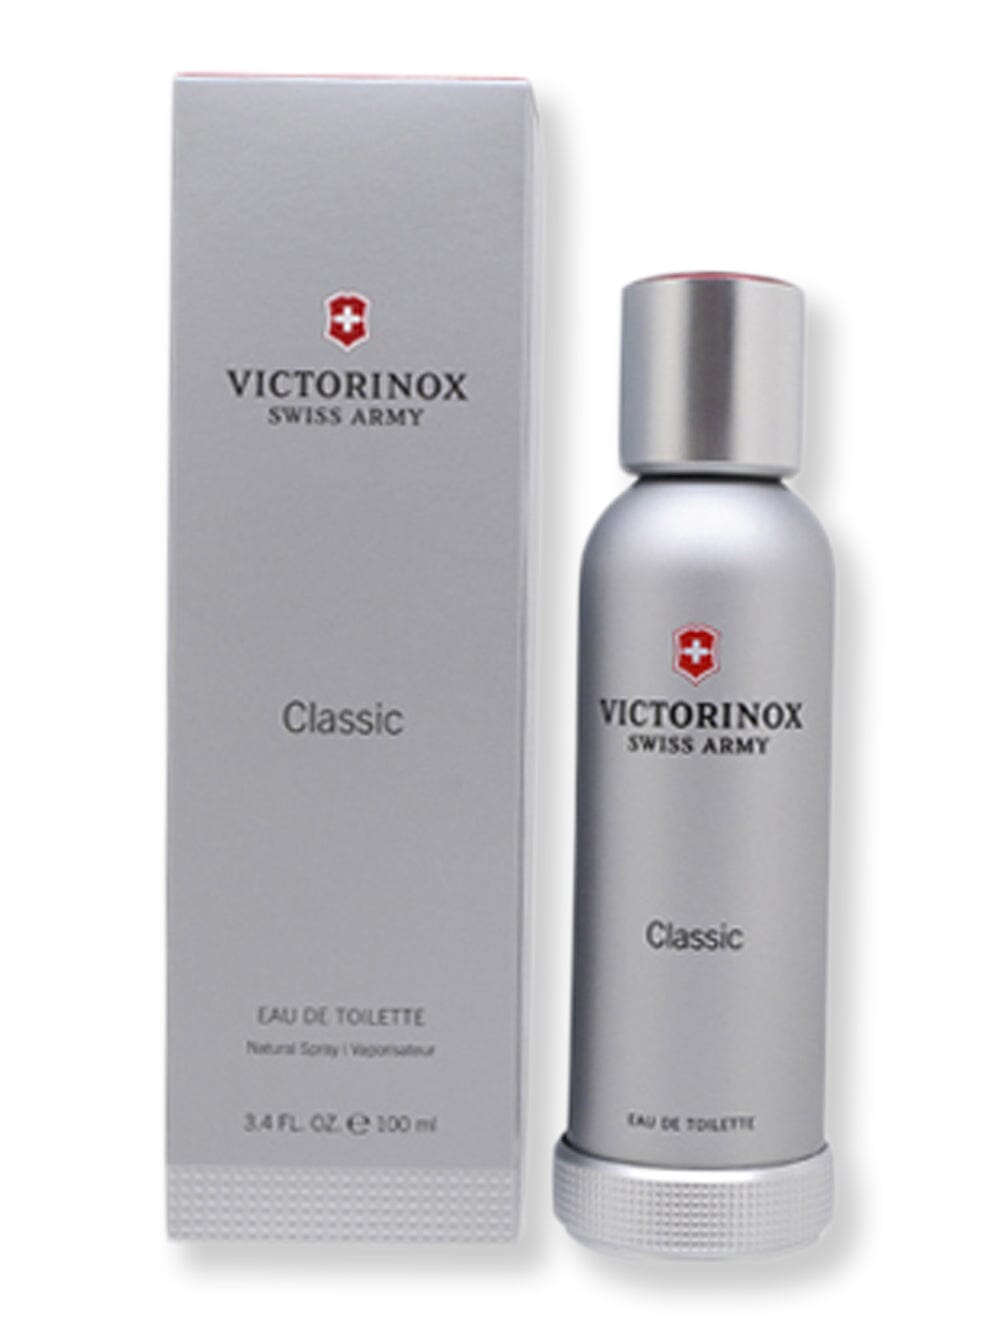 Victorinox Victorinox Swiss Army EDT Spray 3.4 oz100 ml Perfume 